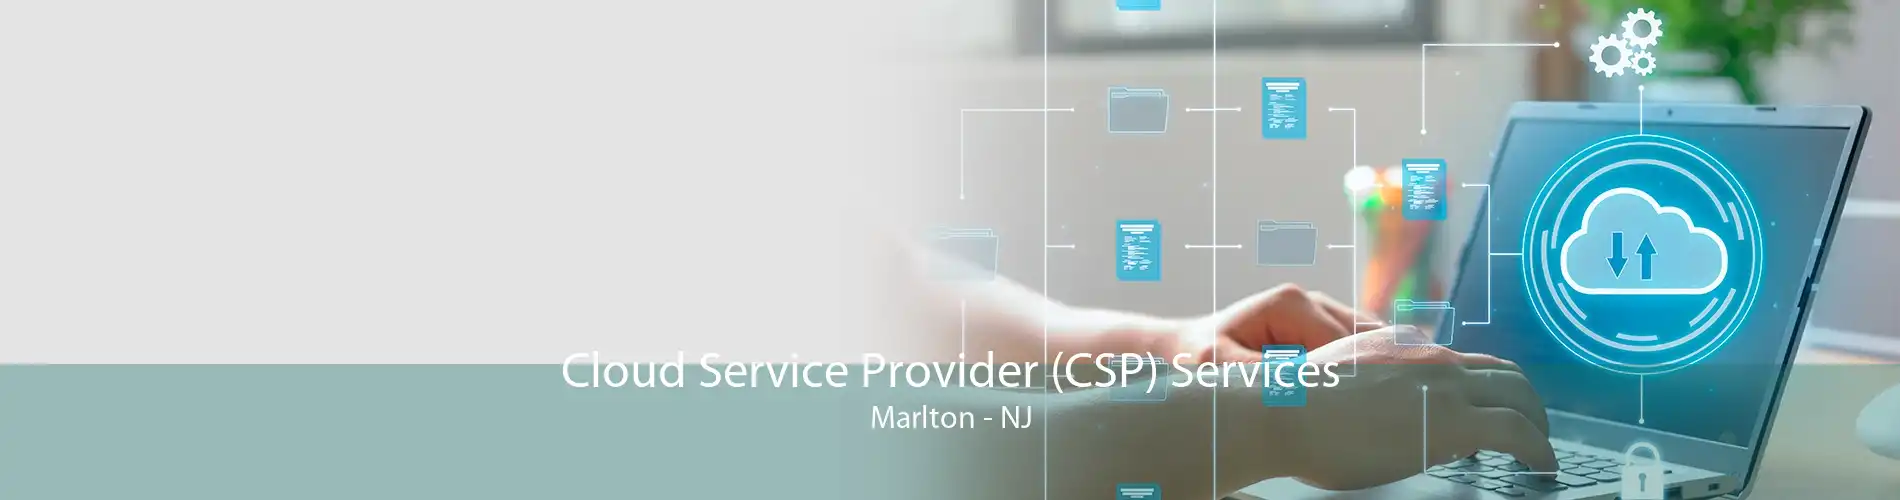 Cloud Service Provider (CSP) Services Marlton - NJ